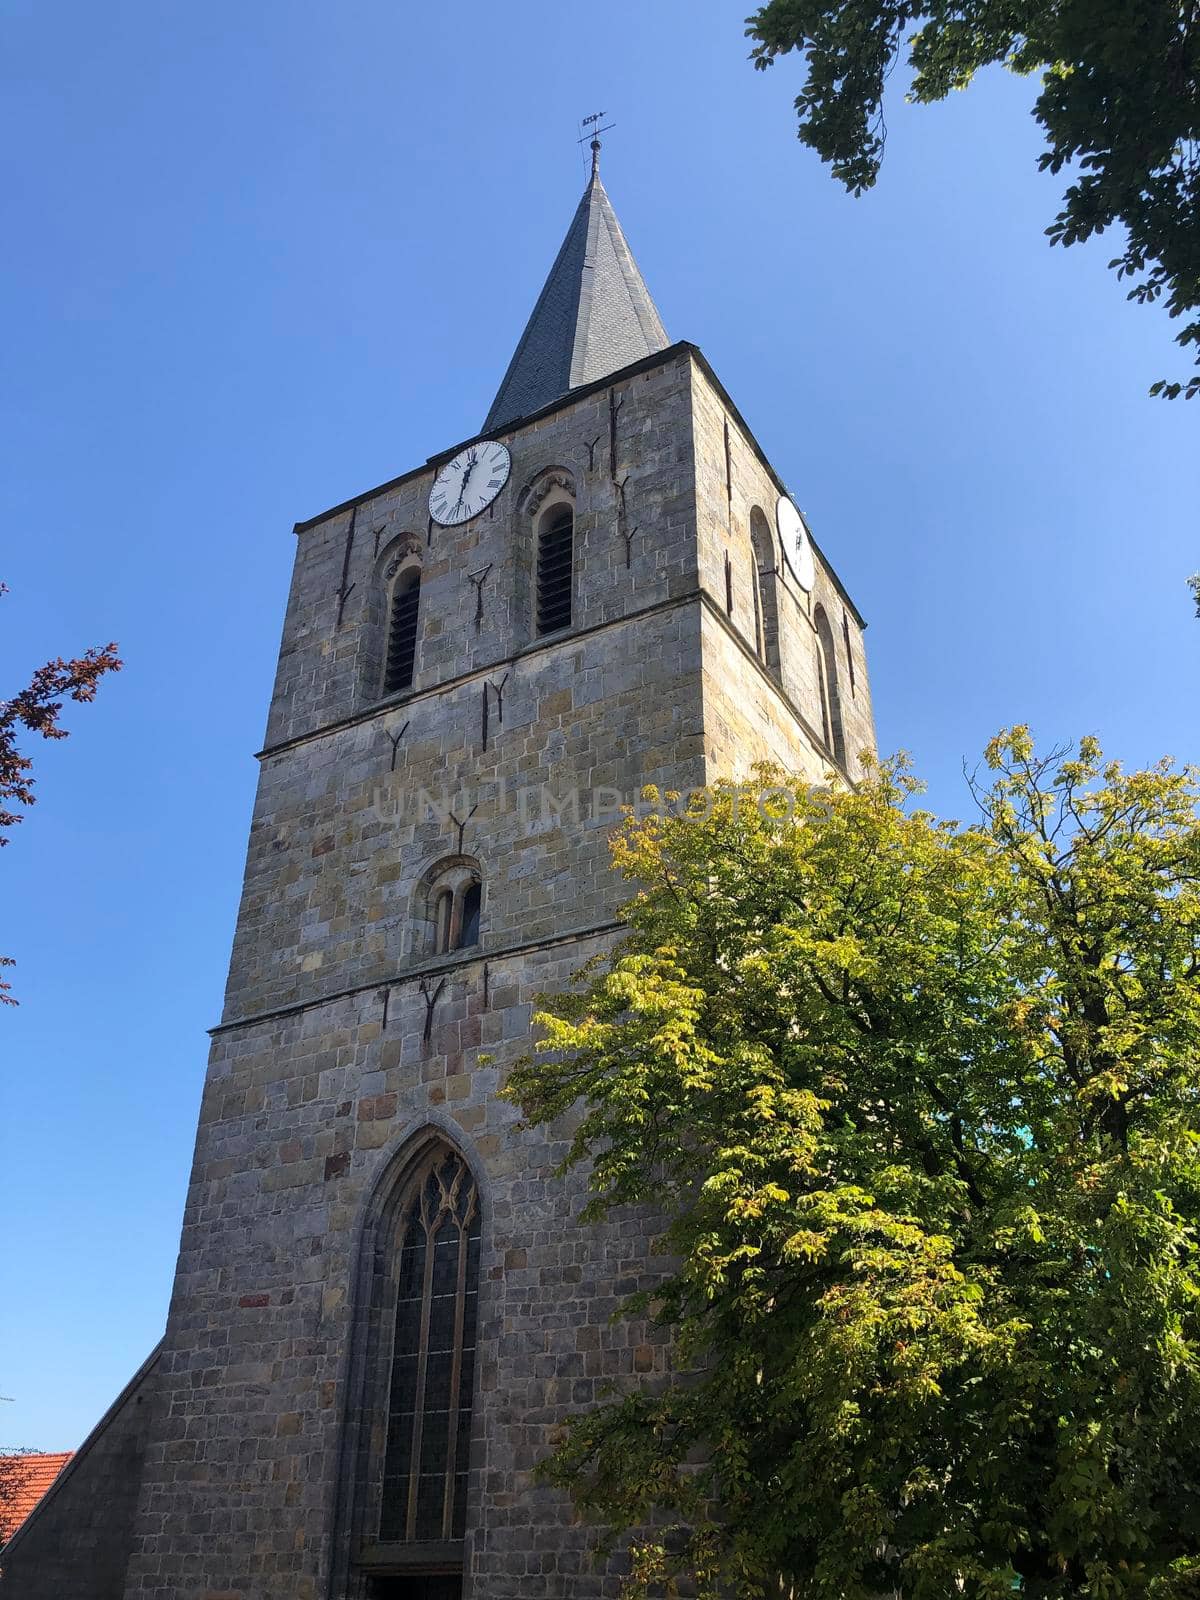 Church in Uelsen, Germany